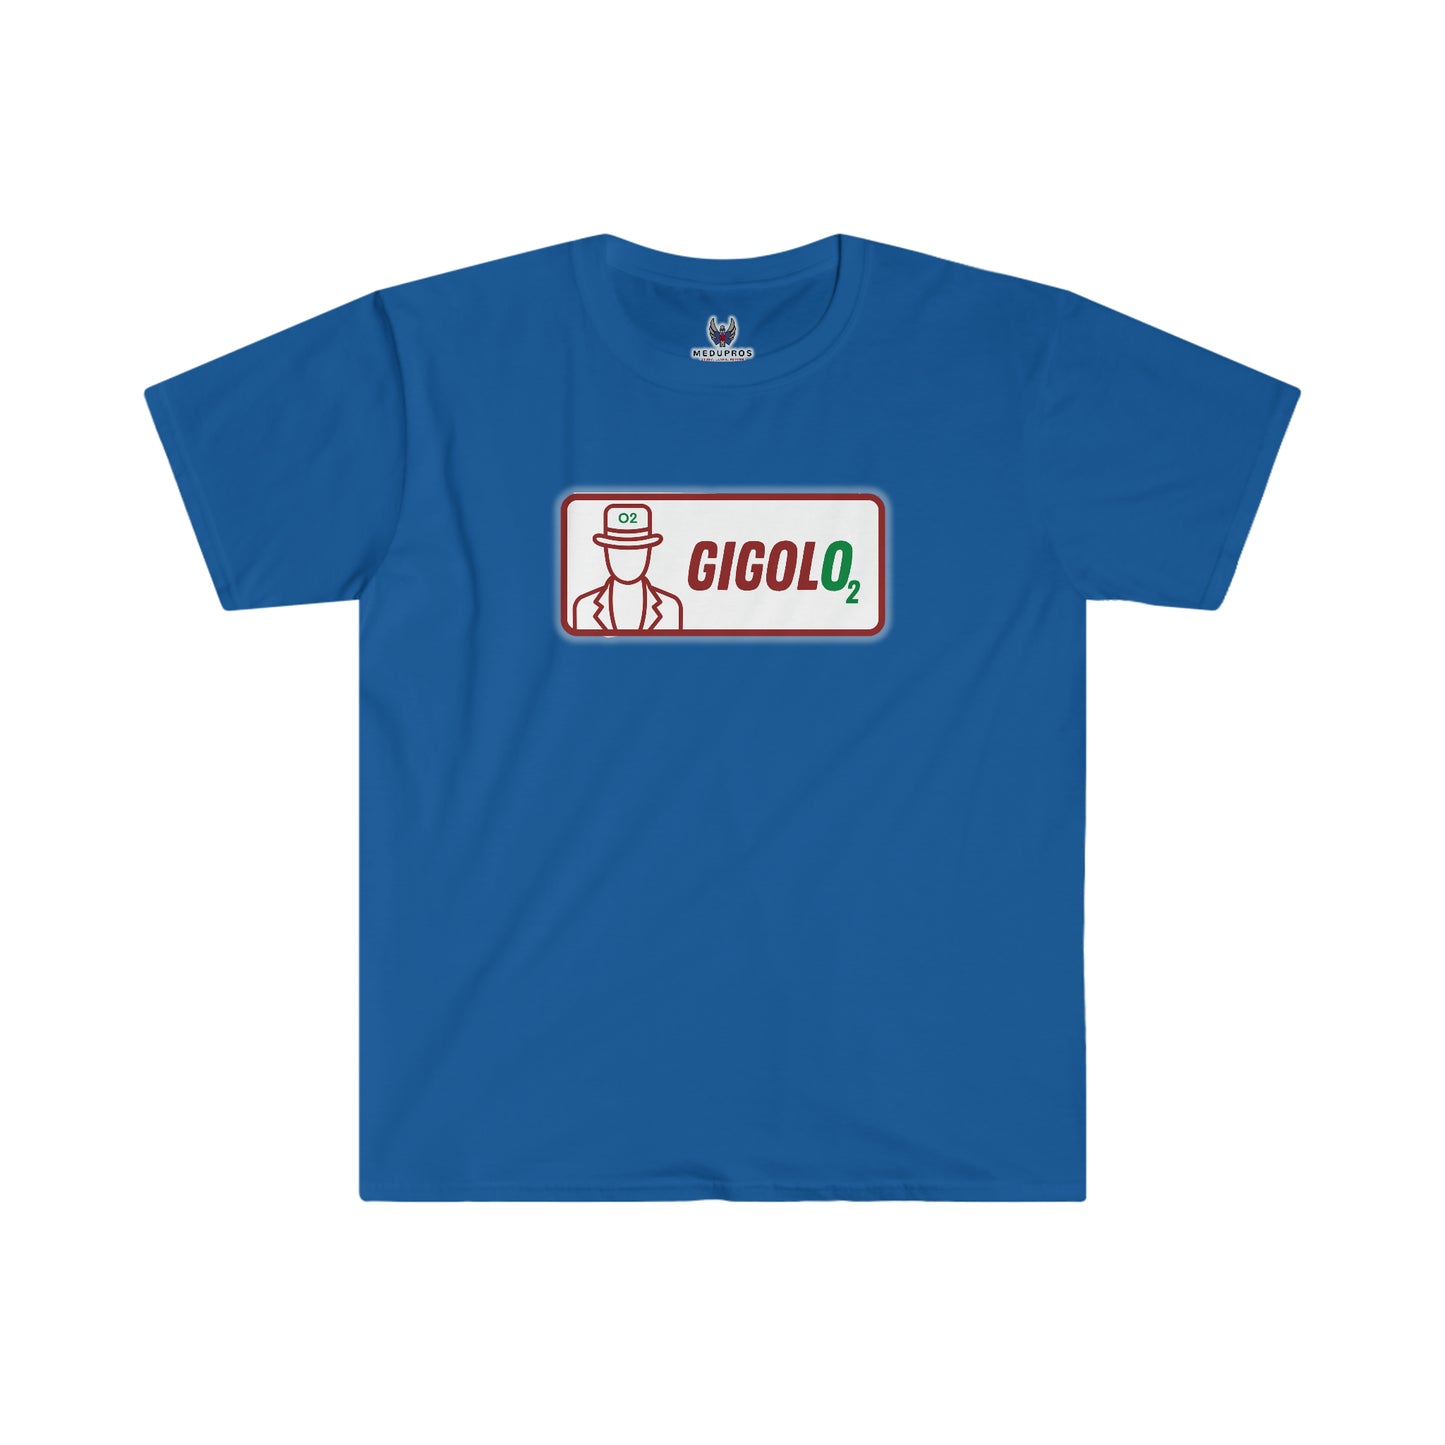 GigglO2 T-shirt